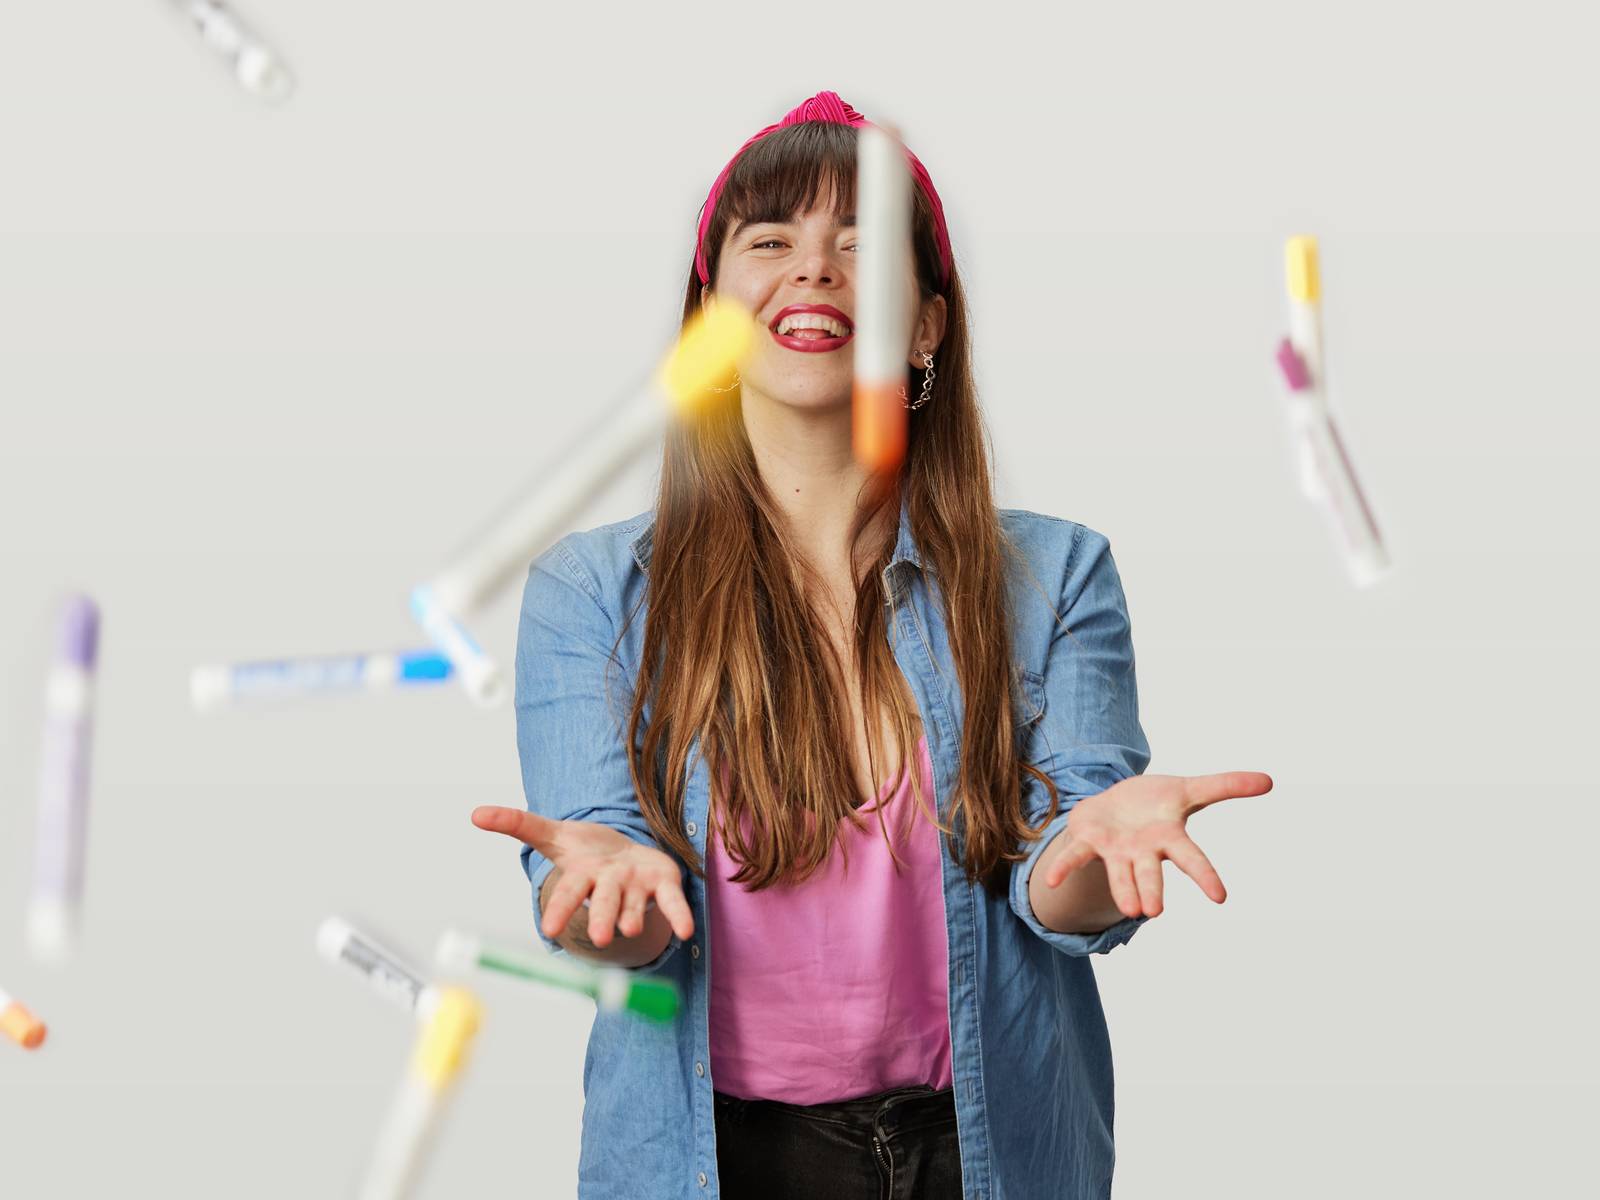 Camila throwing coloured pens.